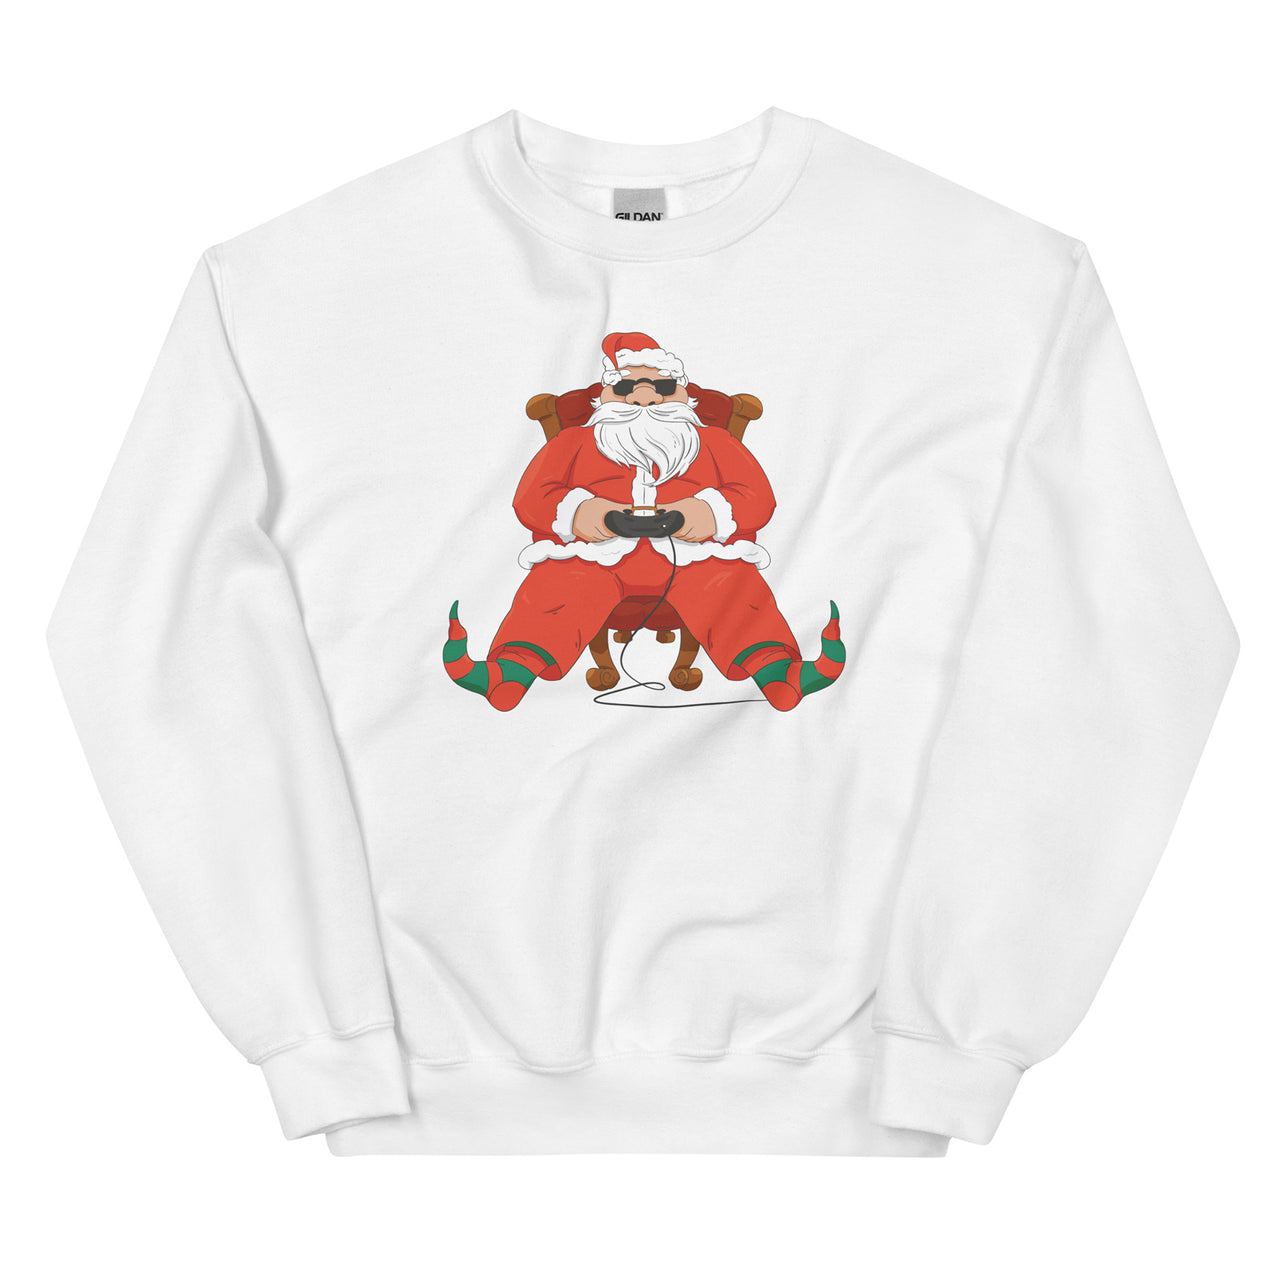 Gamer Santa Sweatshirt, Gaming Christmas Sweatshirt